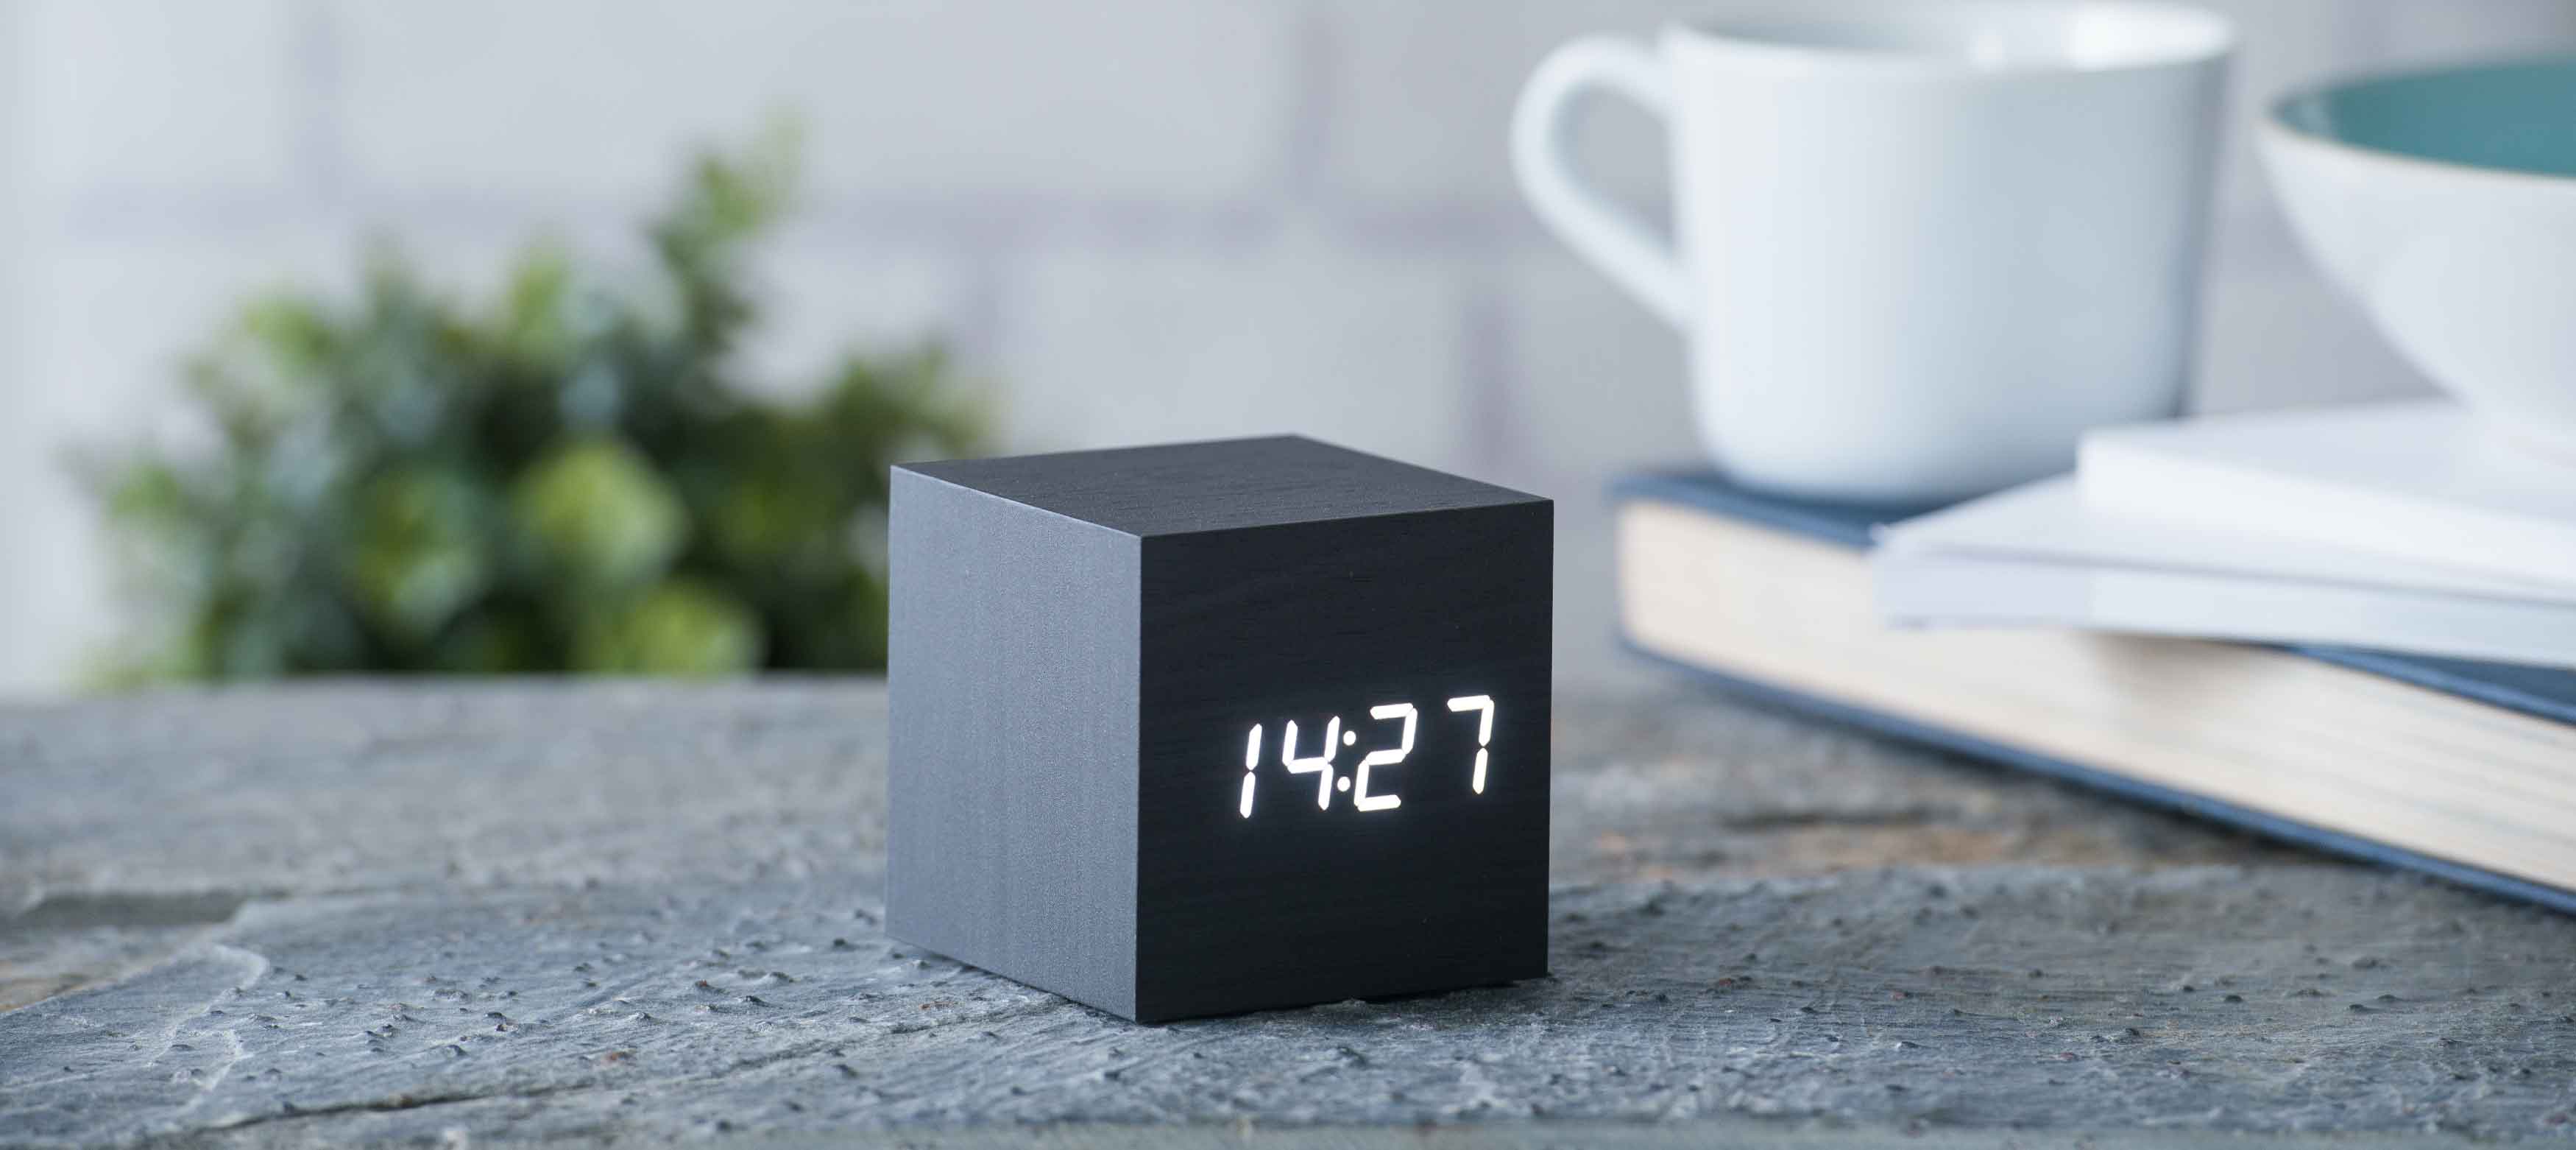 LED Digital Wooden Alarm Clock (5)